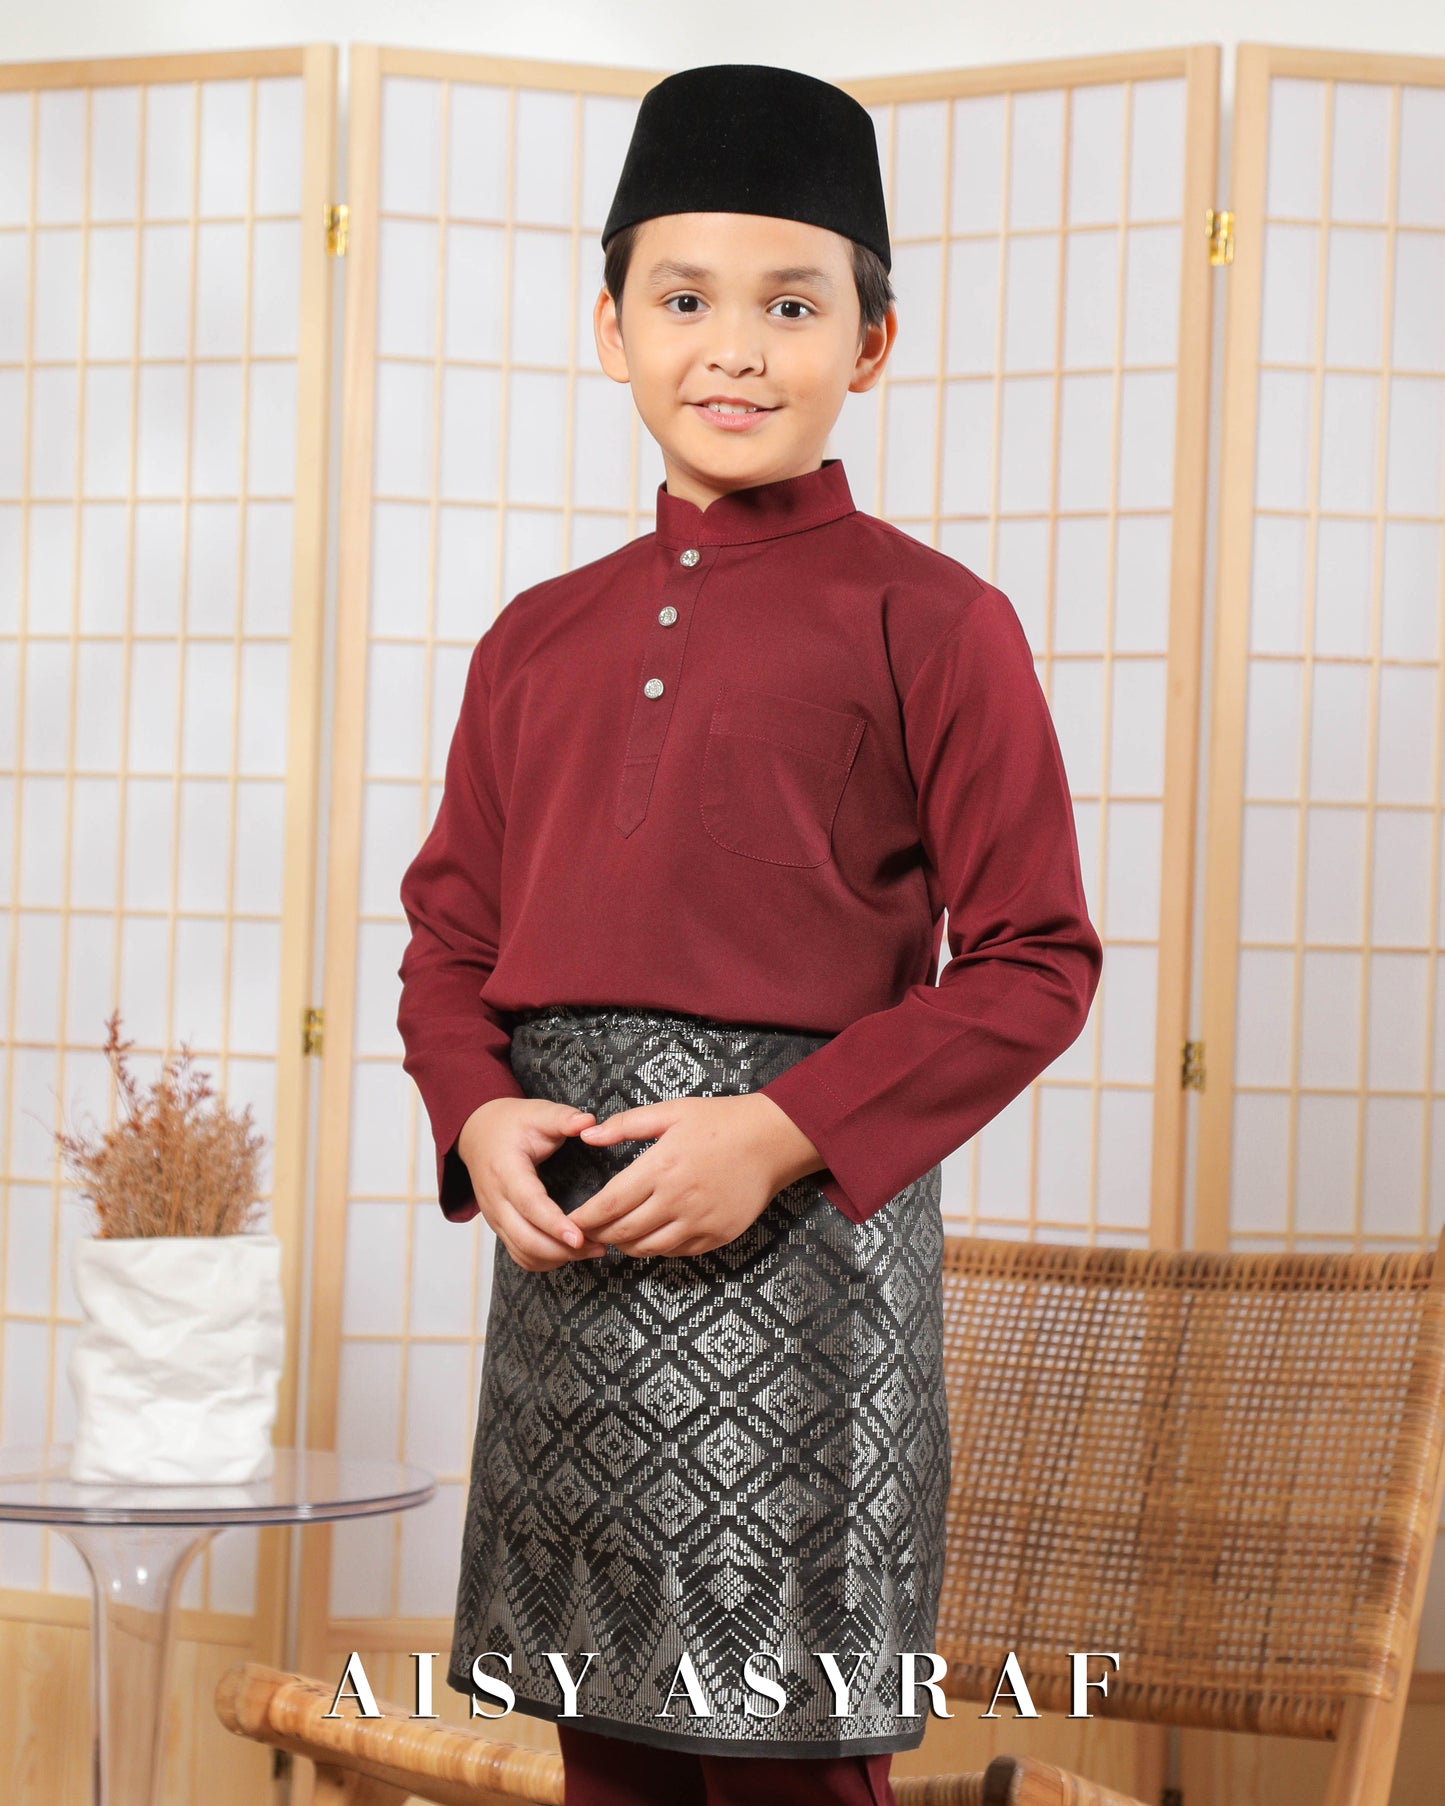 Baju Melayu Zaidan Kids - Dark Maroon